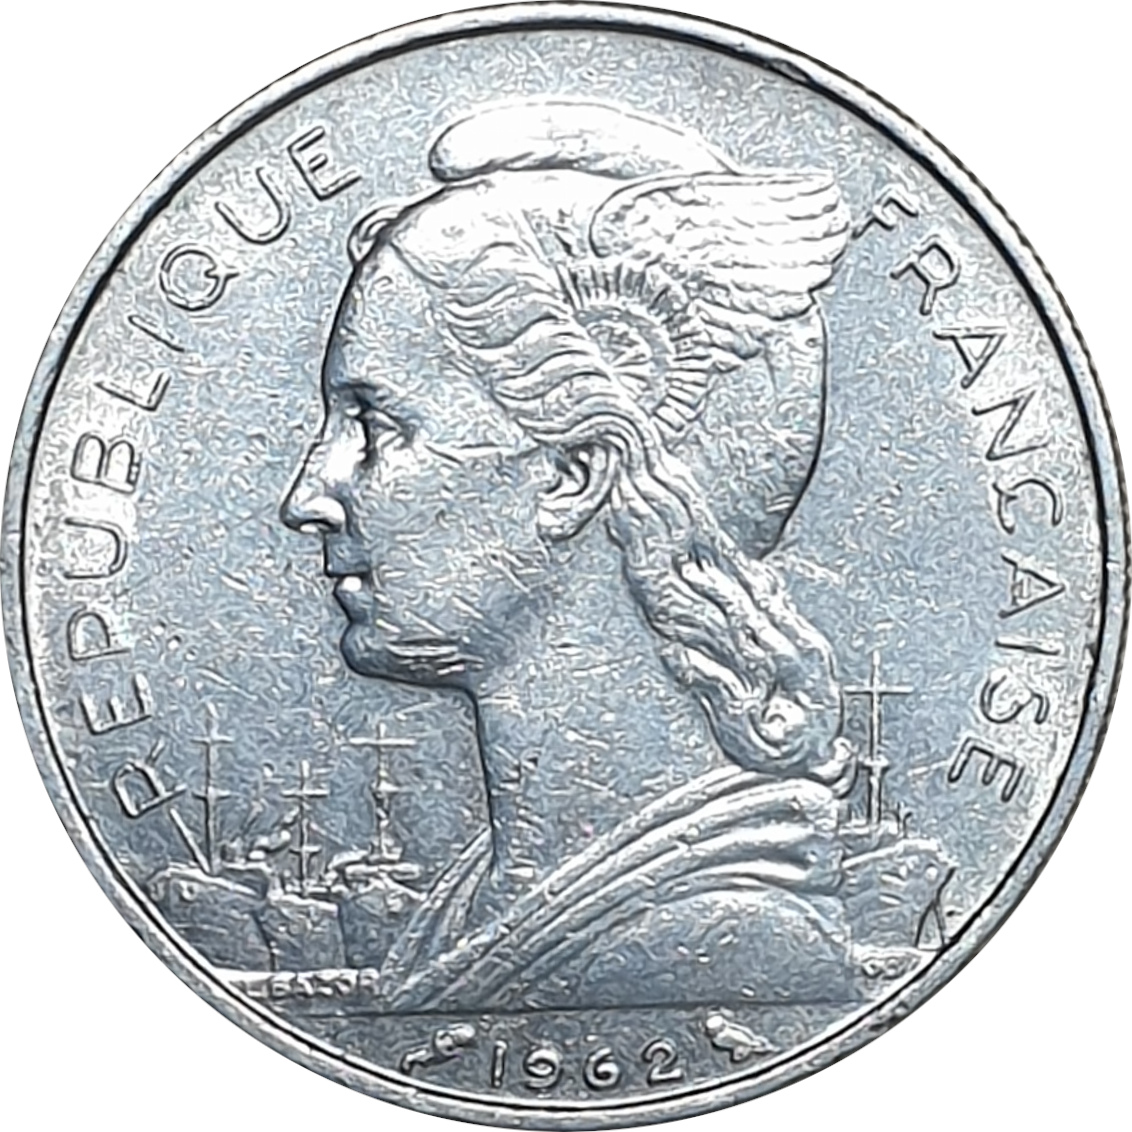 50 francs - Shield